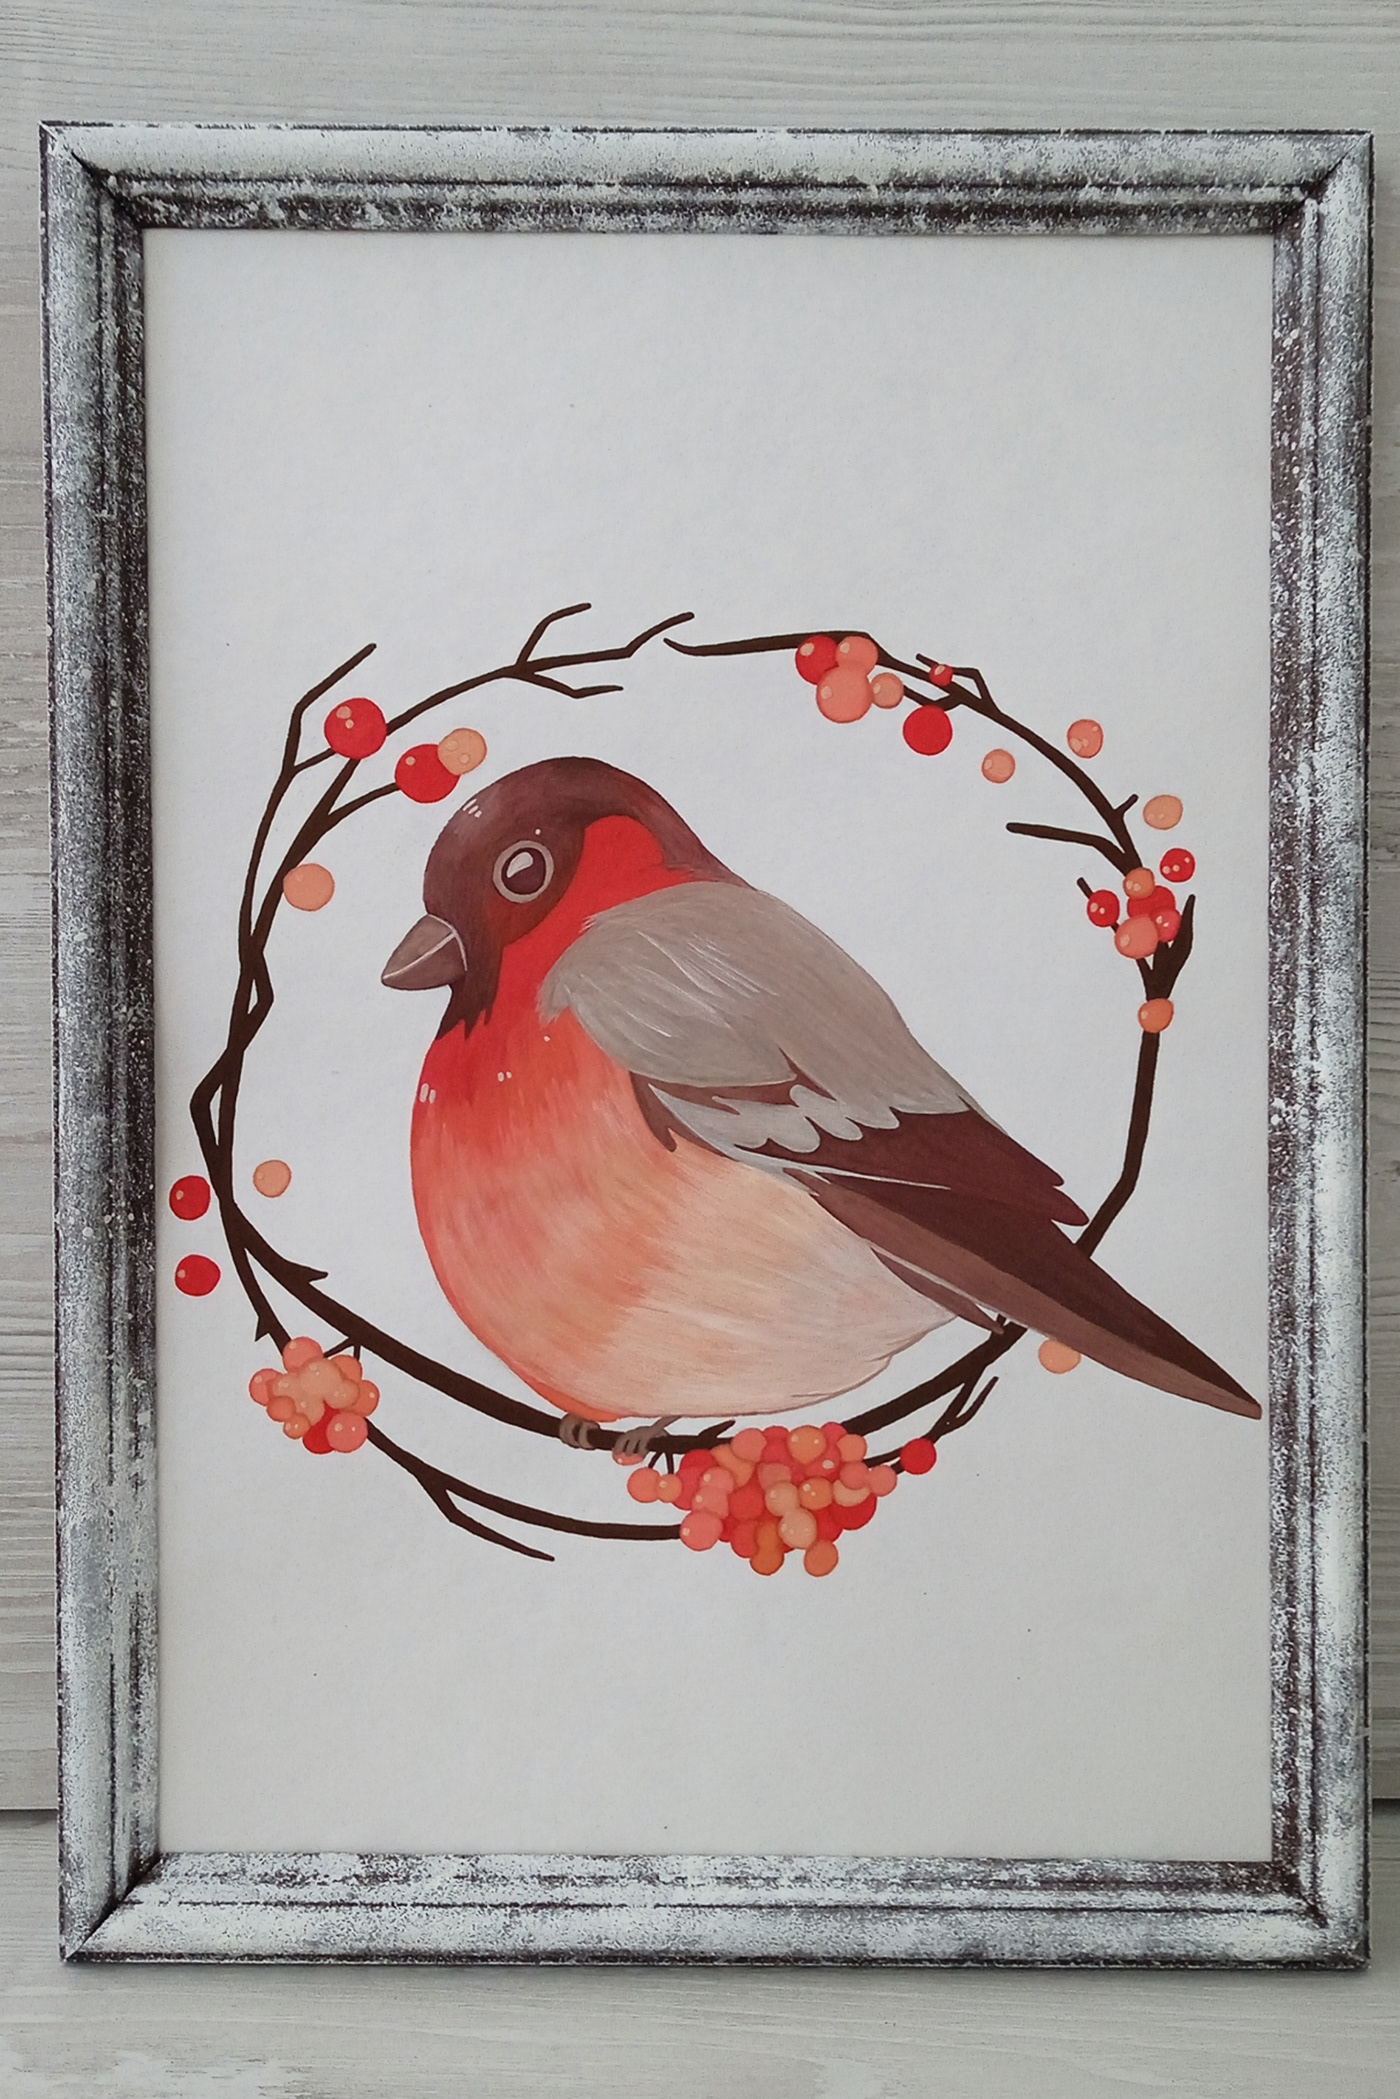 Drawing  artwork Christmas new year winter Holiday bird bullfinch berries painting  